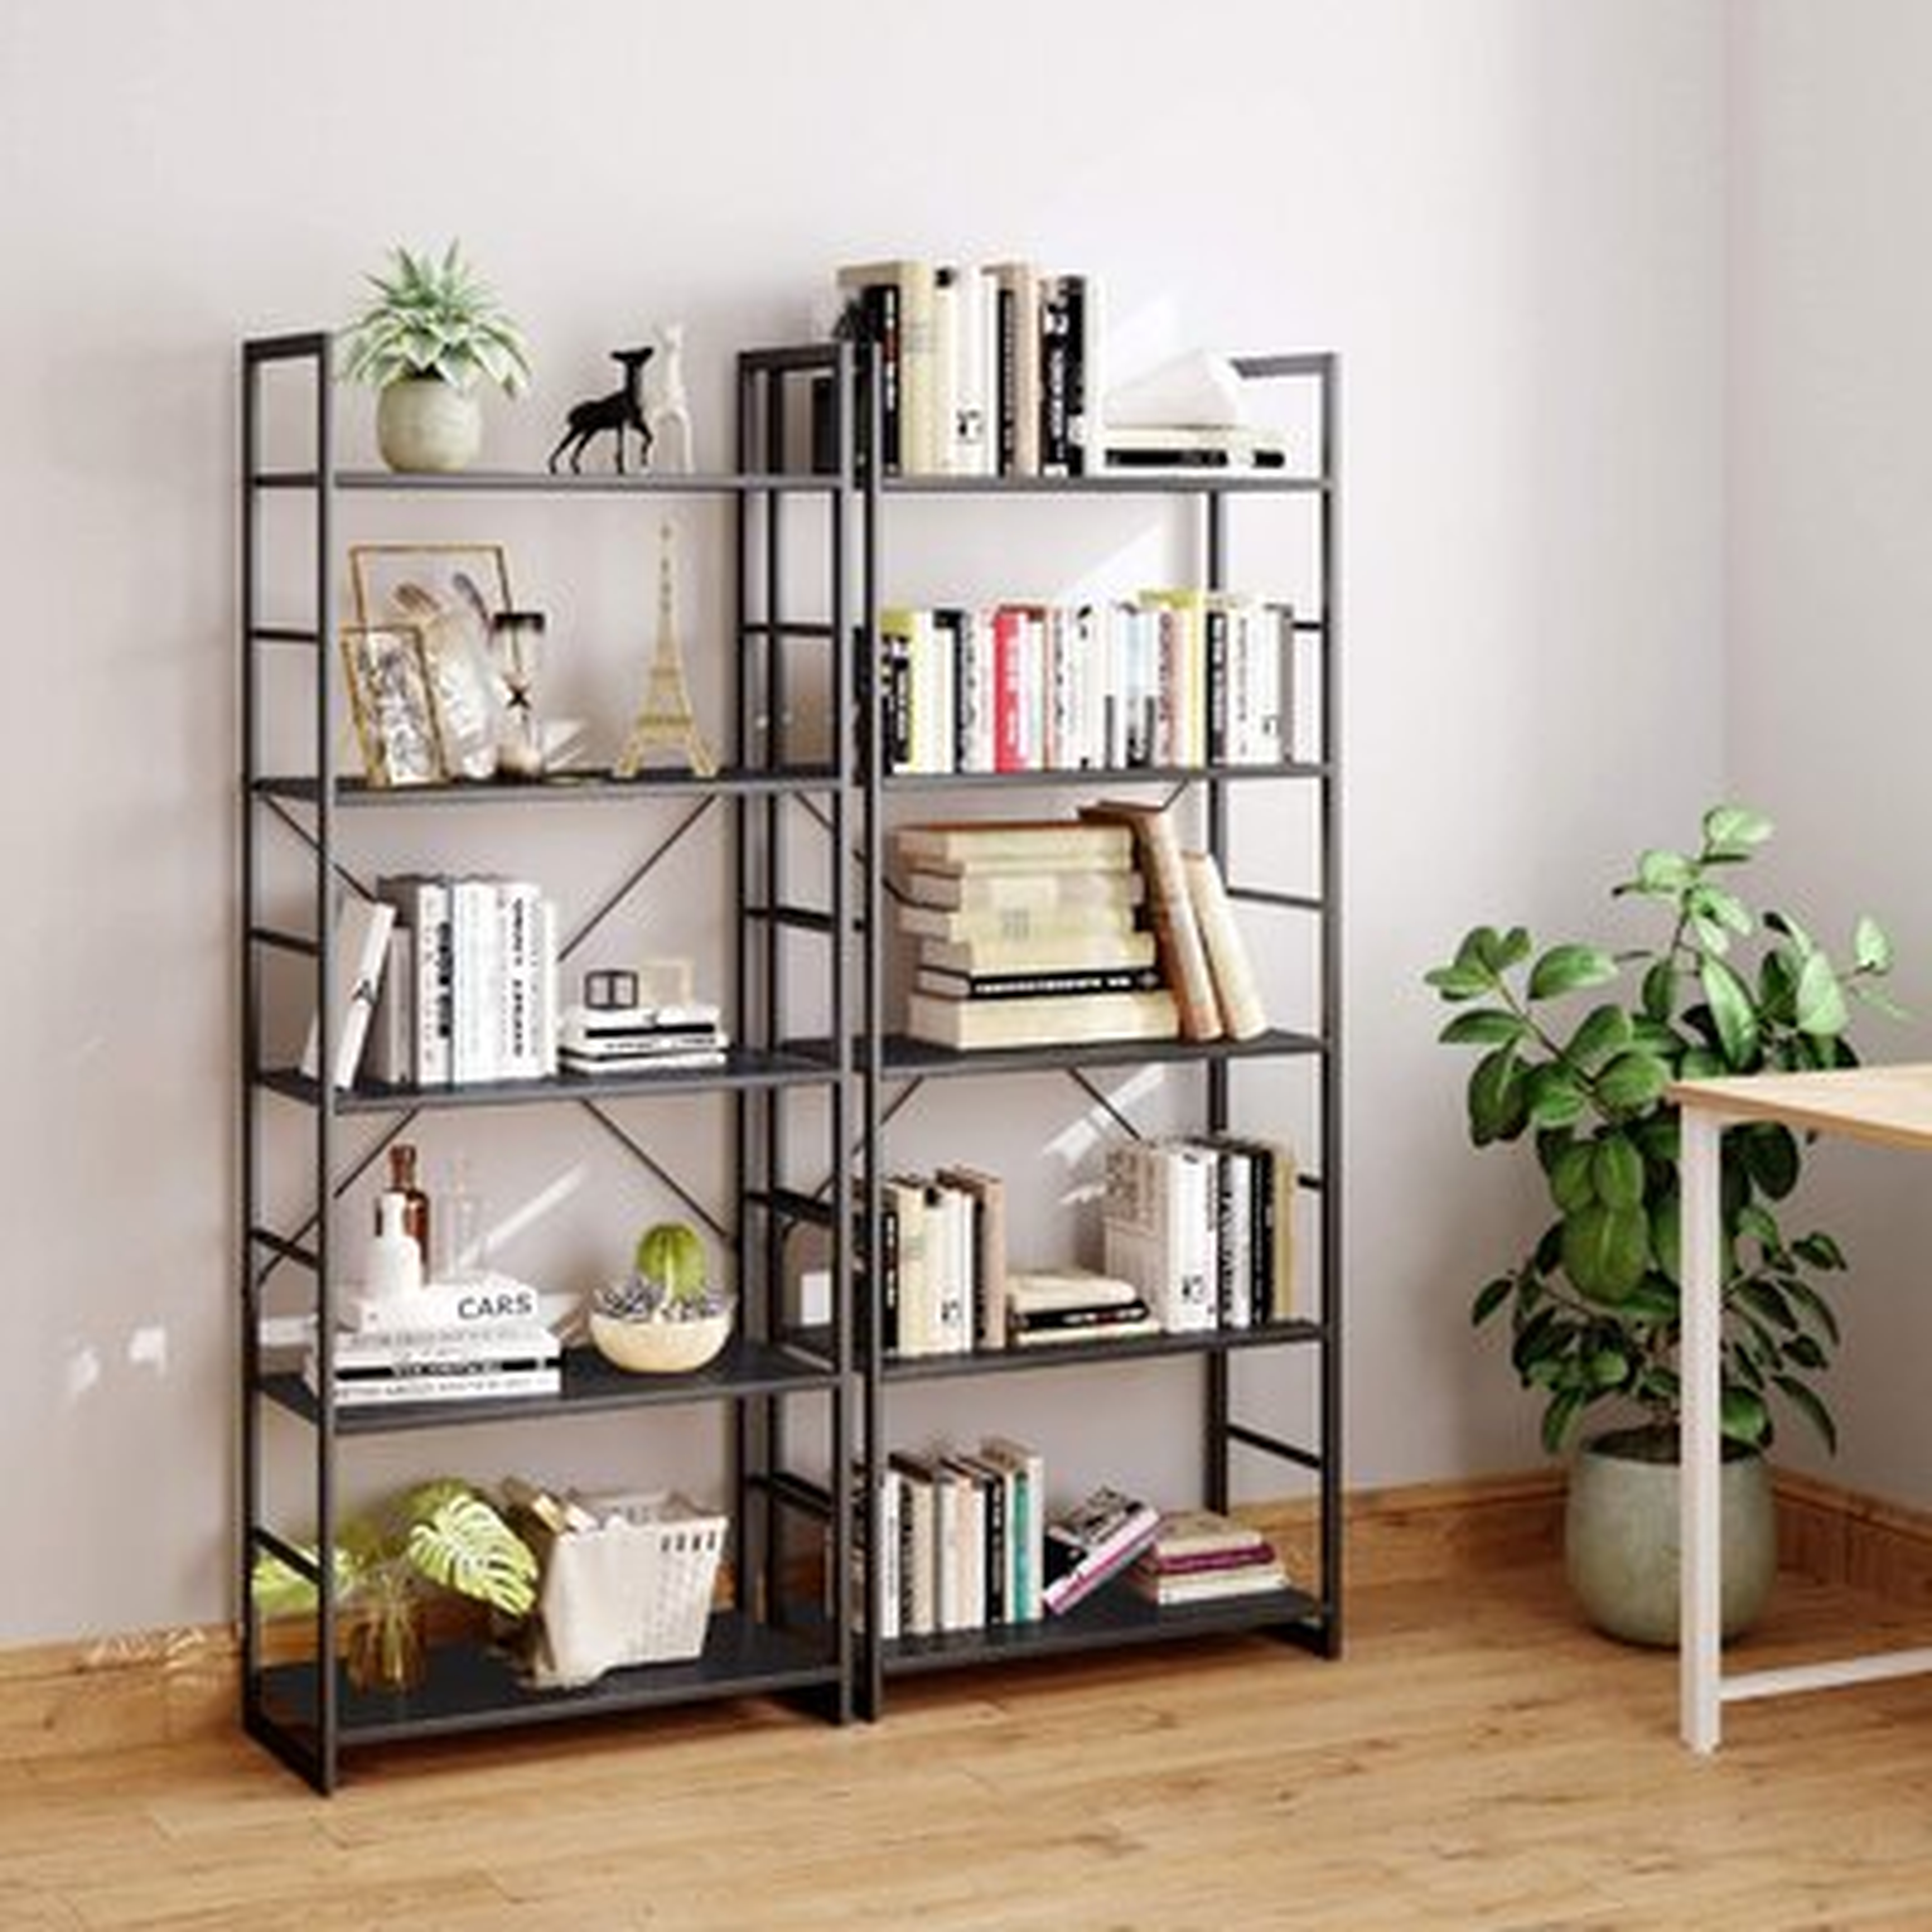 5 Tier Bookshelf, Tall Bookcase Shelf Storage Organizer, Modern Book Shelf For Bedroom, Living Room And Home Office, Black - Wayfair